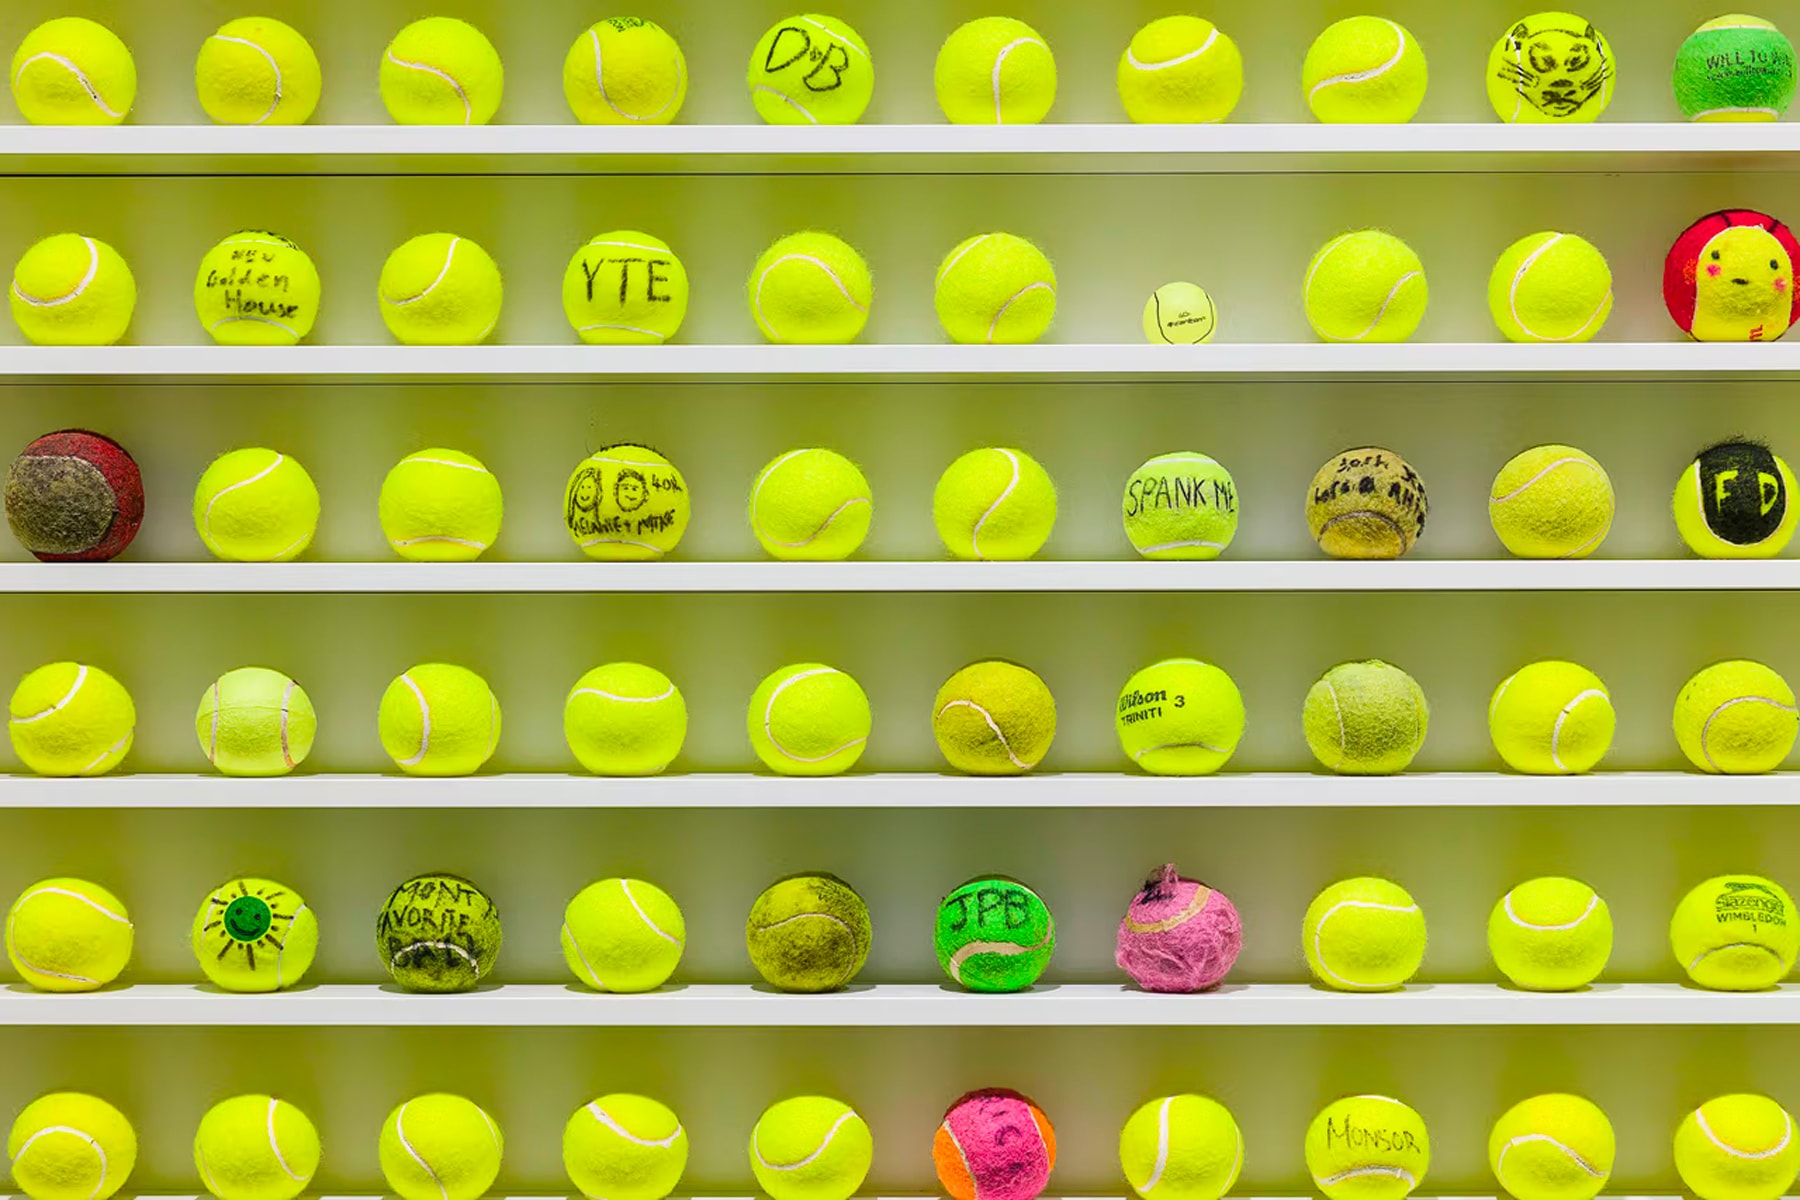 David Shrigley 全新互動展覽《Mayfair Tennis Ball Exchange》正式登場